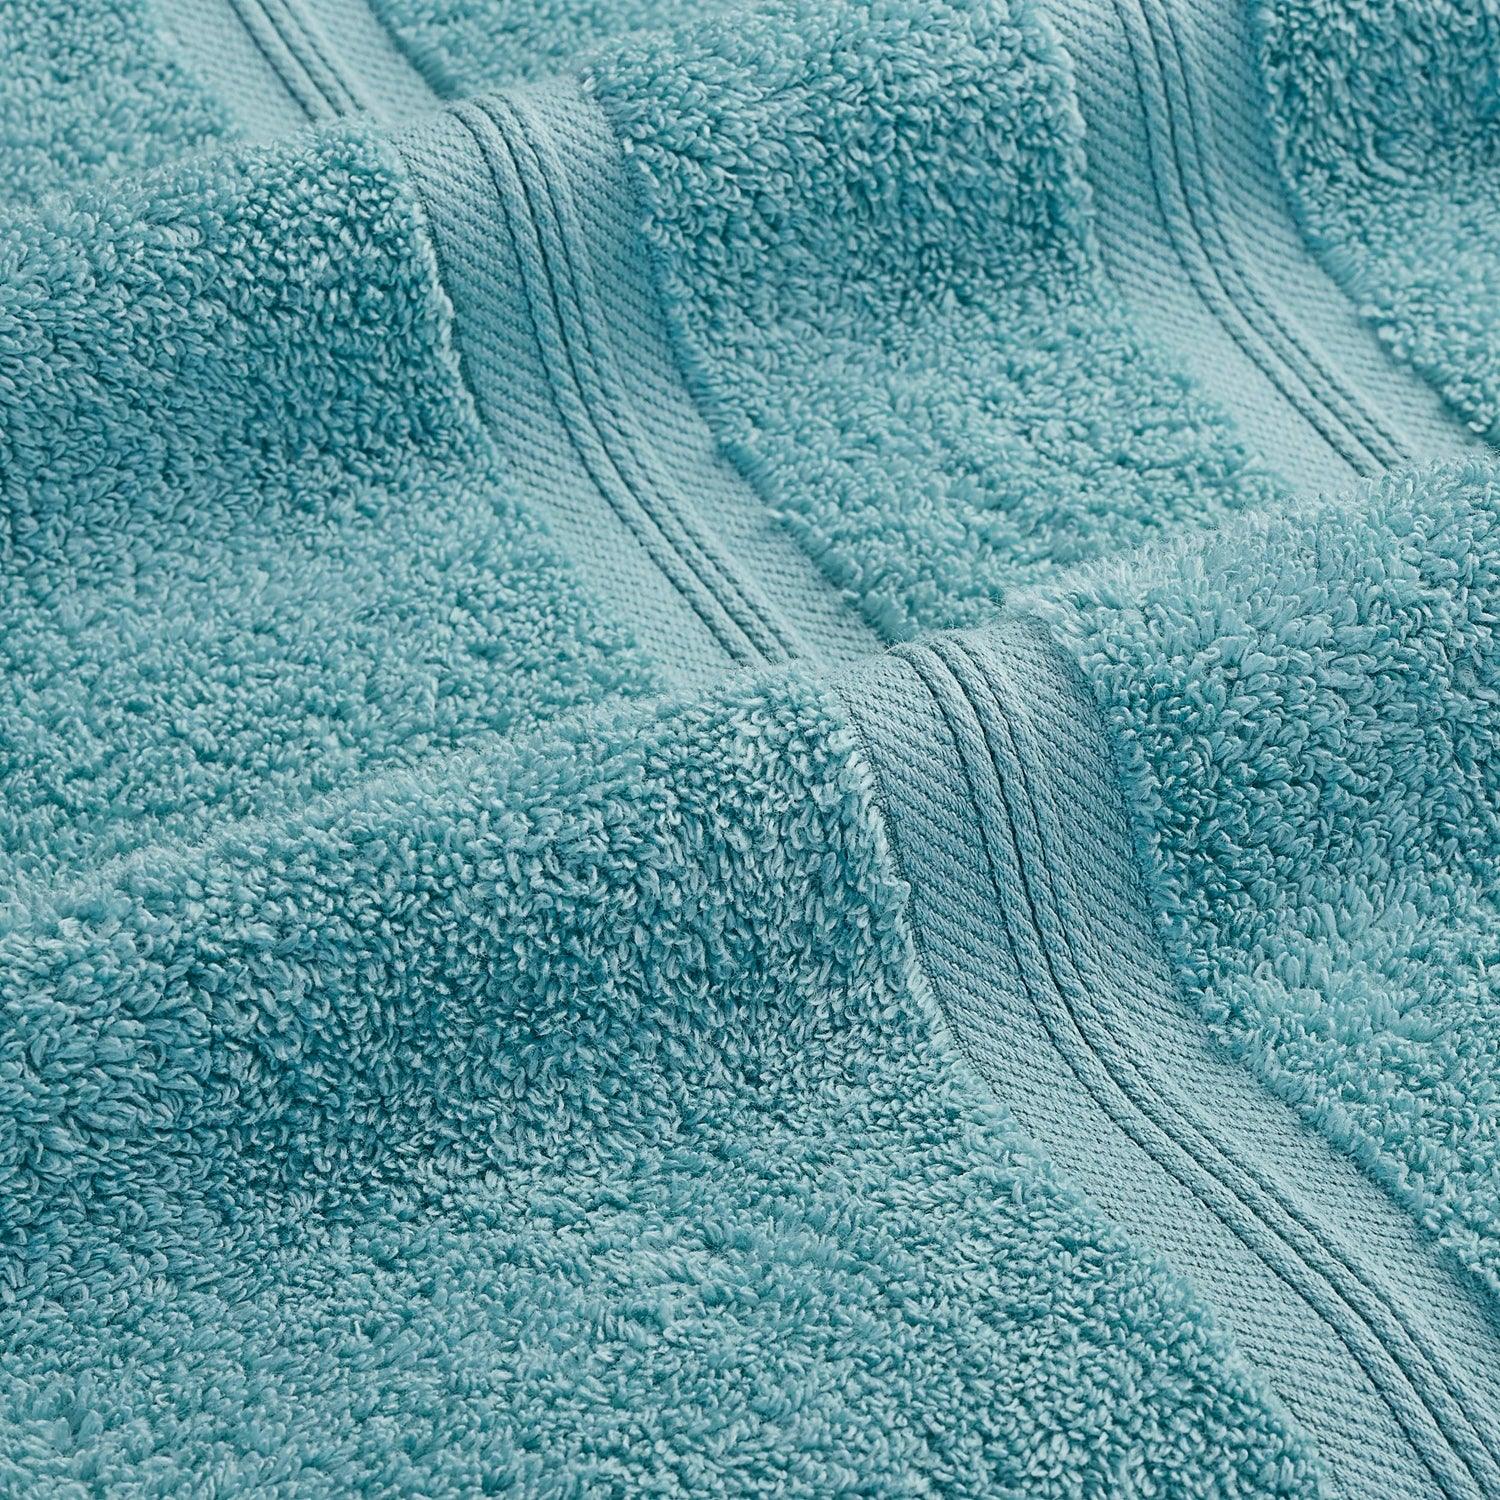  Superior Smart Dry Zero Twist Cotton 6-Piece Assorted Towel Set - Turquoise